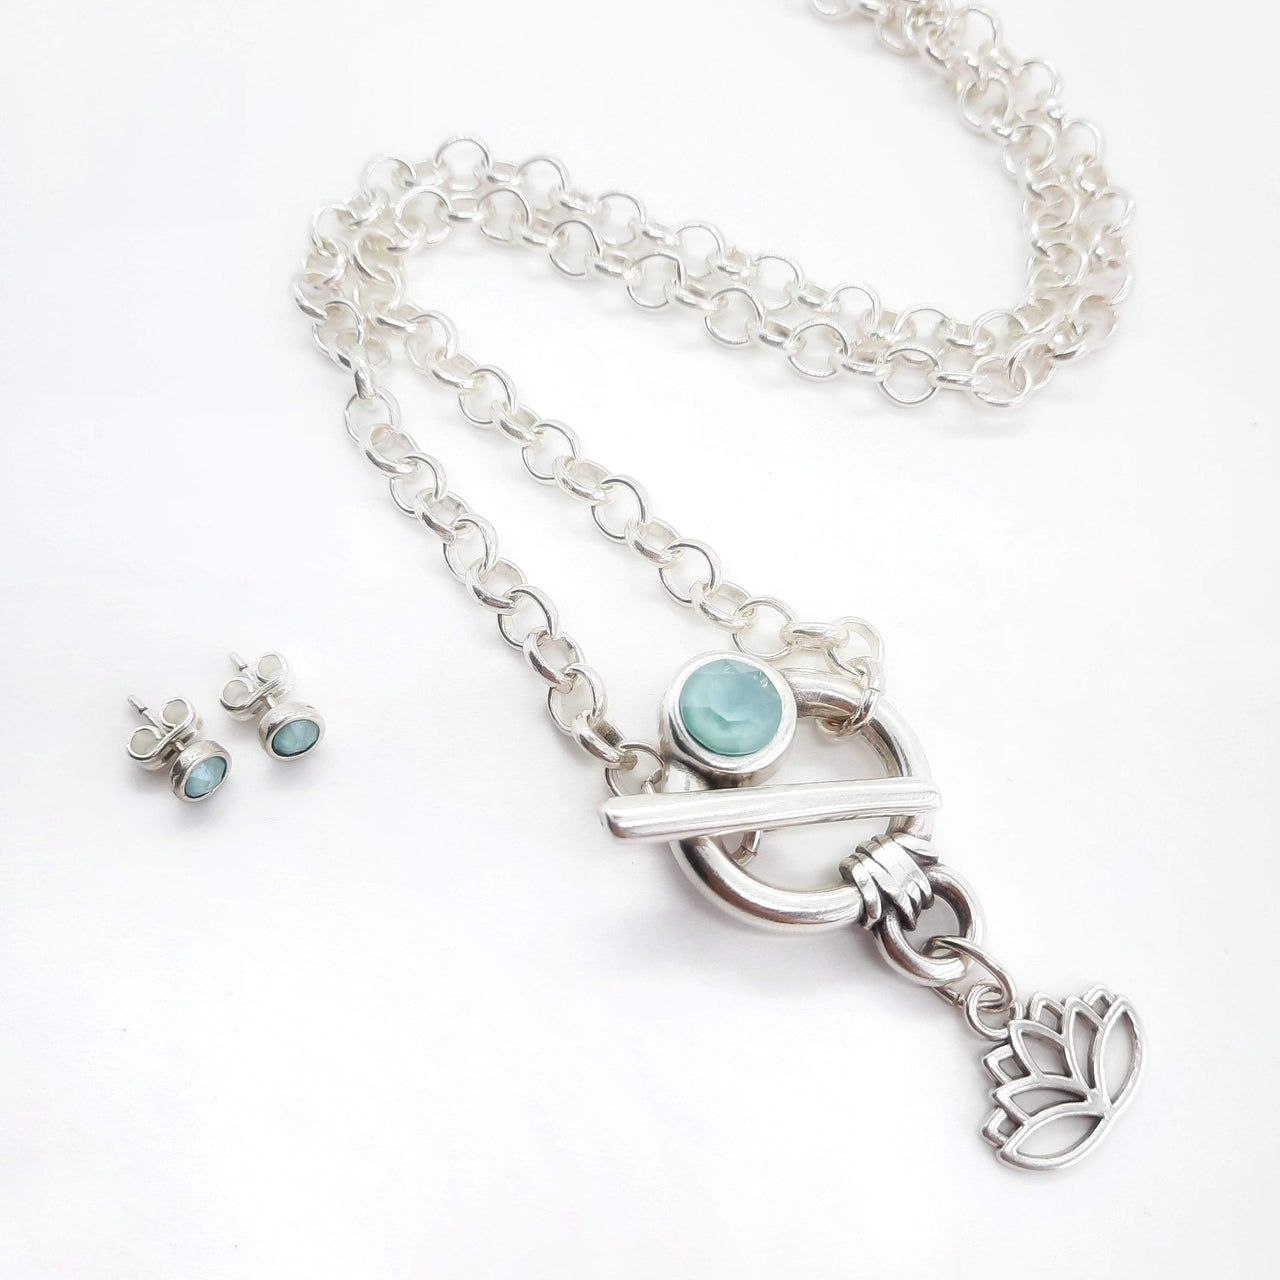 Halskette mit Lotusblume und Swarovski - Mint Shine Cercle Halskette KOOMPLIMENTS SET Halskette + Ohrstecker